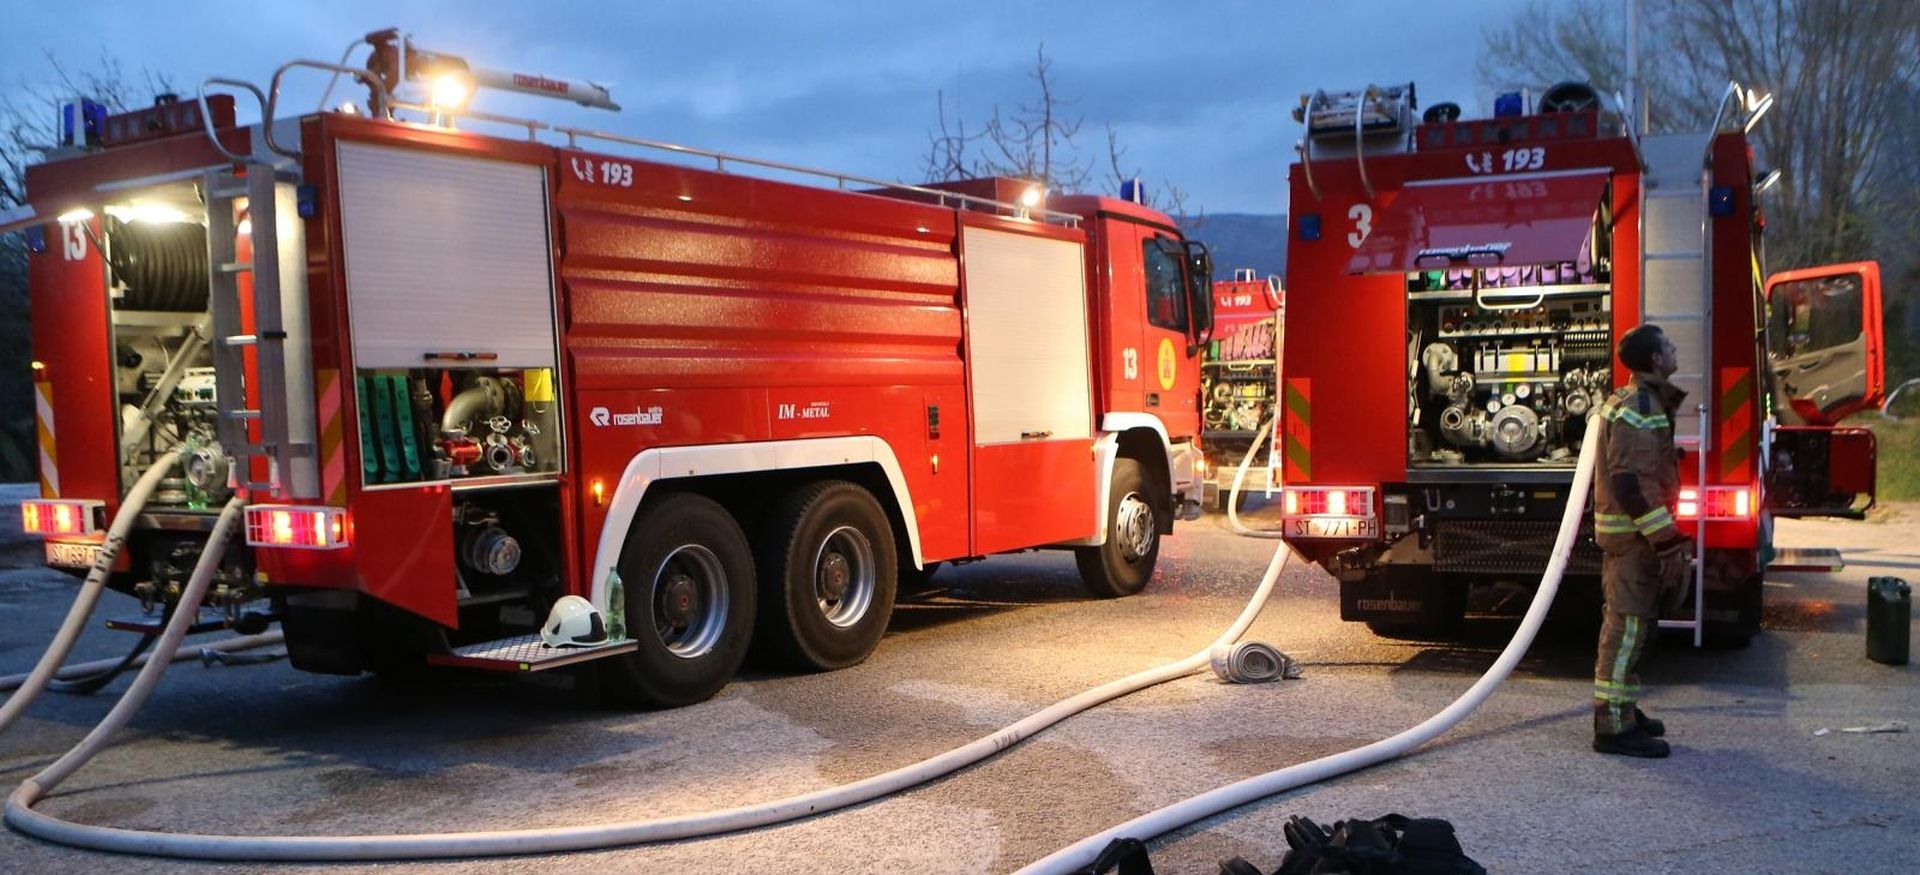 01.04.2015., Split - Vatrogasna vozila i vatrogasna oprema.
Photo: Ivo Cagalj/PIXSELL